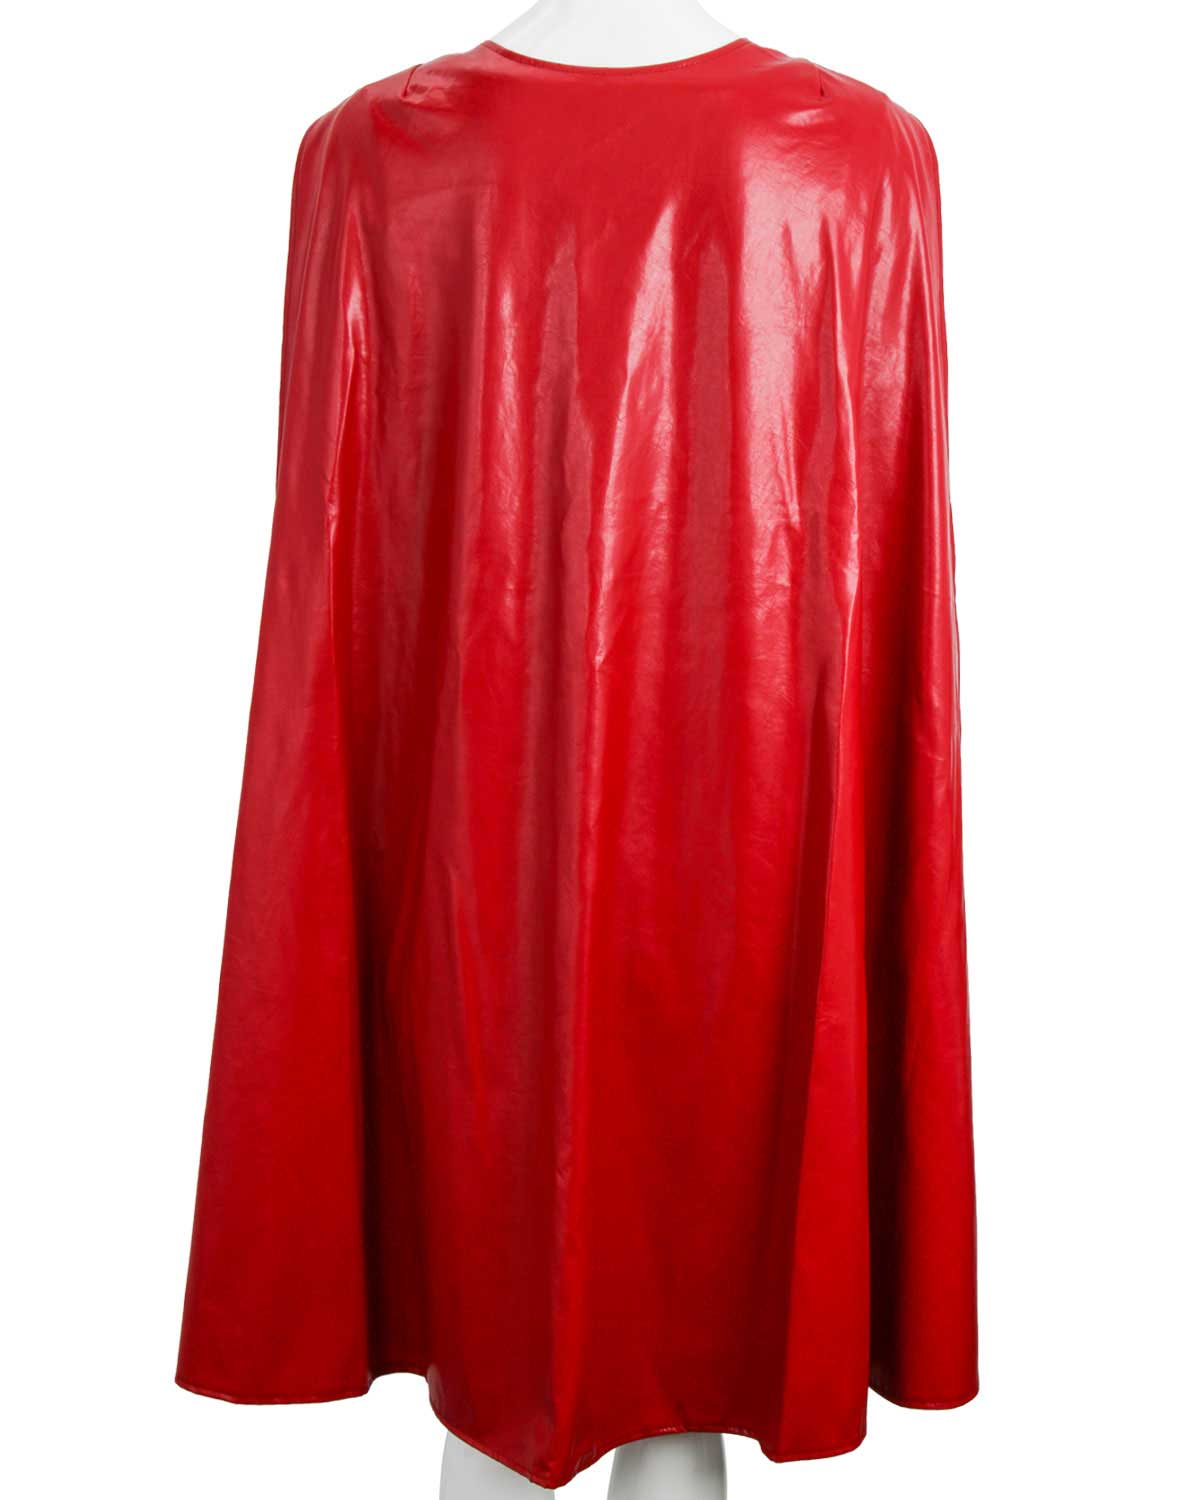 Supergirl Kara Zor-l Cosplay Costume Set Super Woman Sexy Fancy Dress